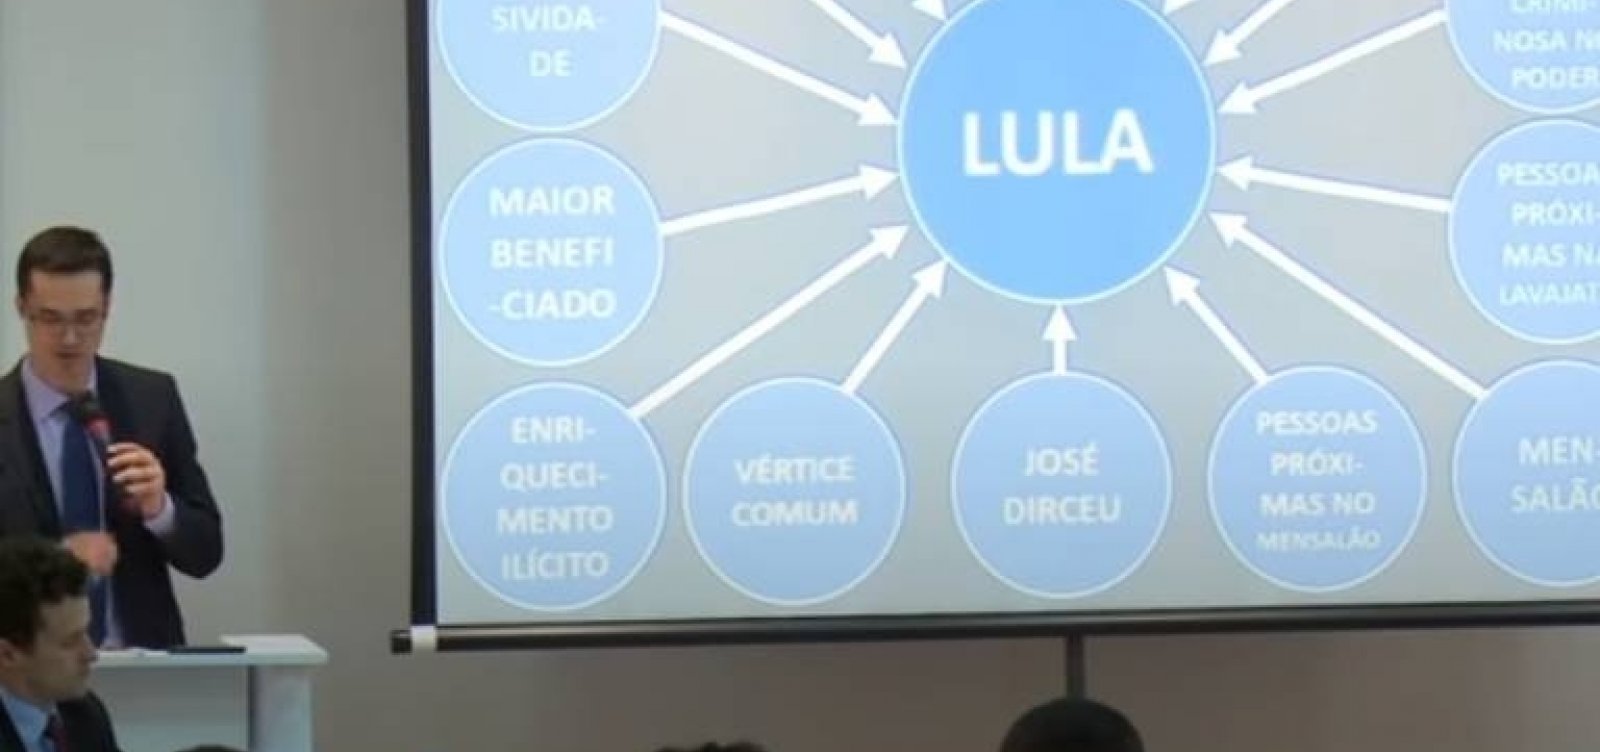 PowerPoint sobre Lula foi "erro de cálculo", diz Deltan Dallagnol 